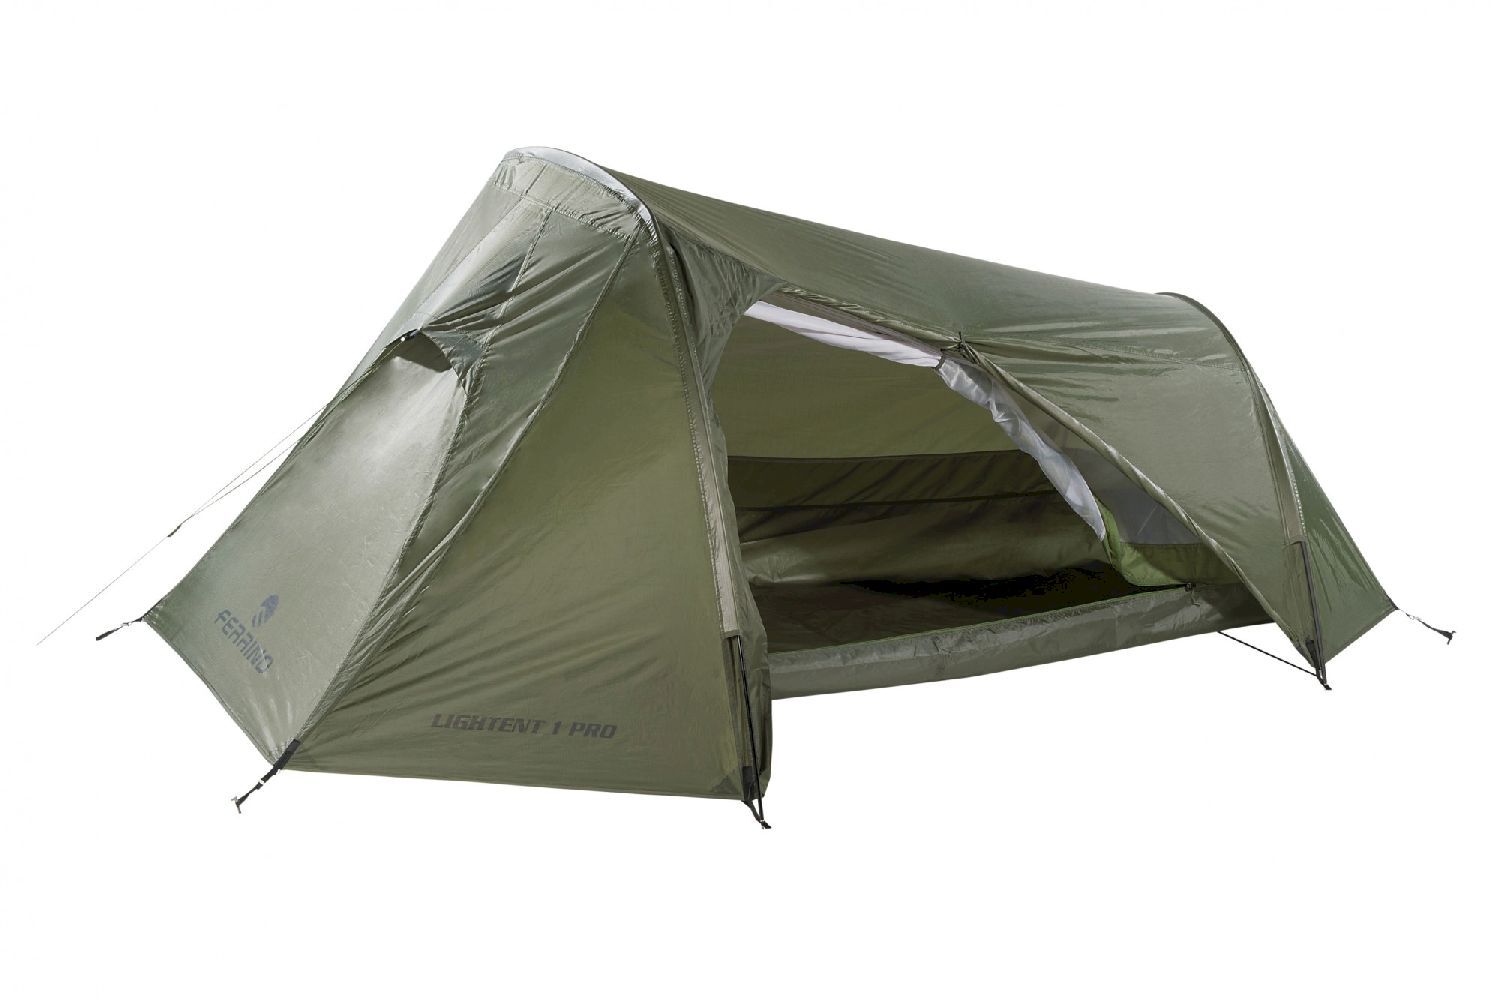 Ferrino Lightent 1 Pro - Tent